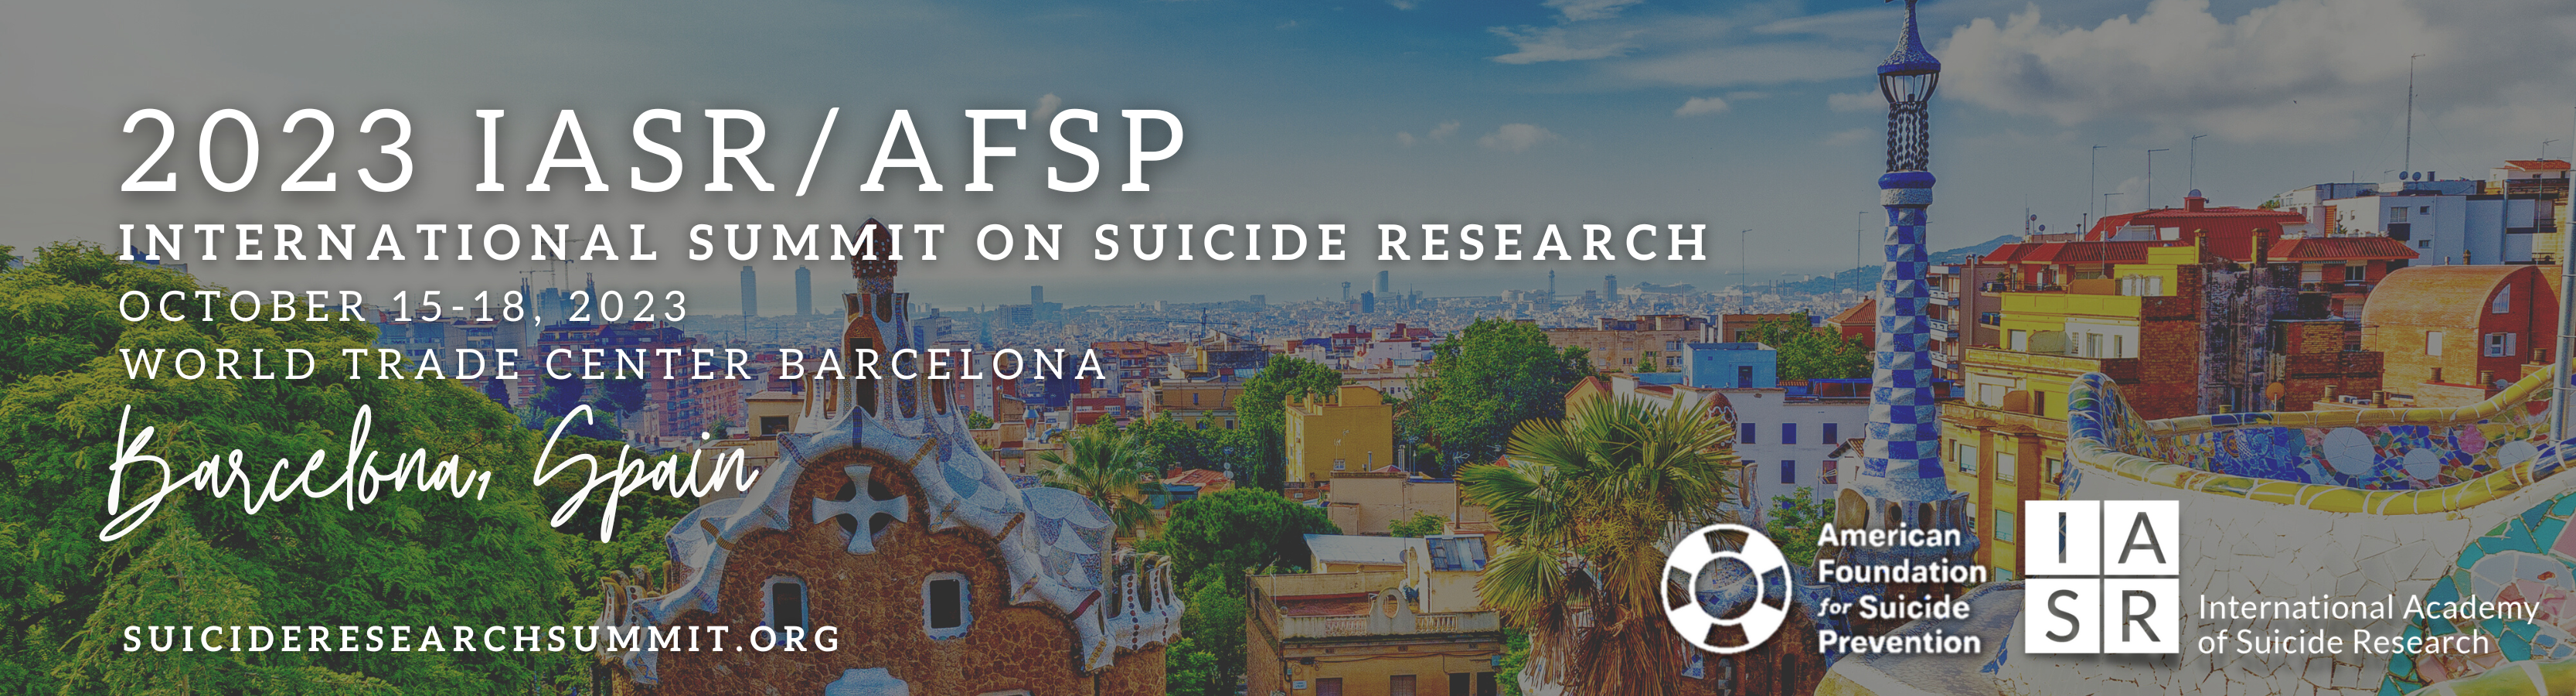 IASR/AFSP INTERNATIONAL SUMMIT ON SUICIDE RESEARCH OCTOBER 15-18, 2023 • BARCELONA, SPAIN